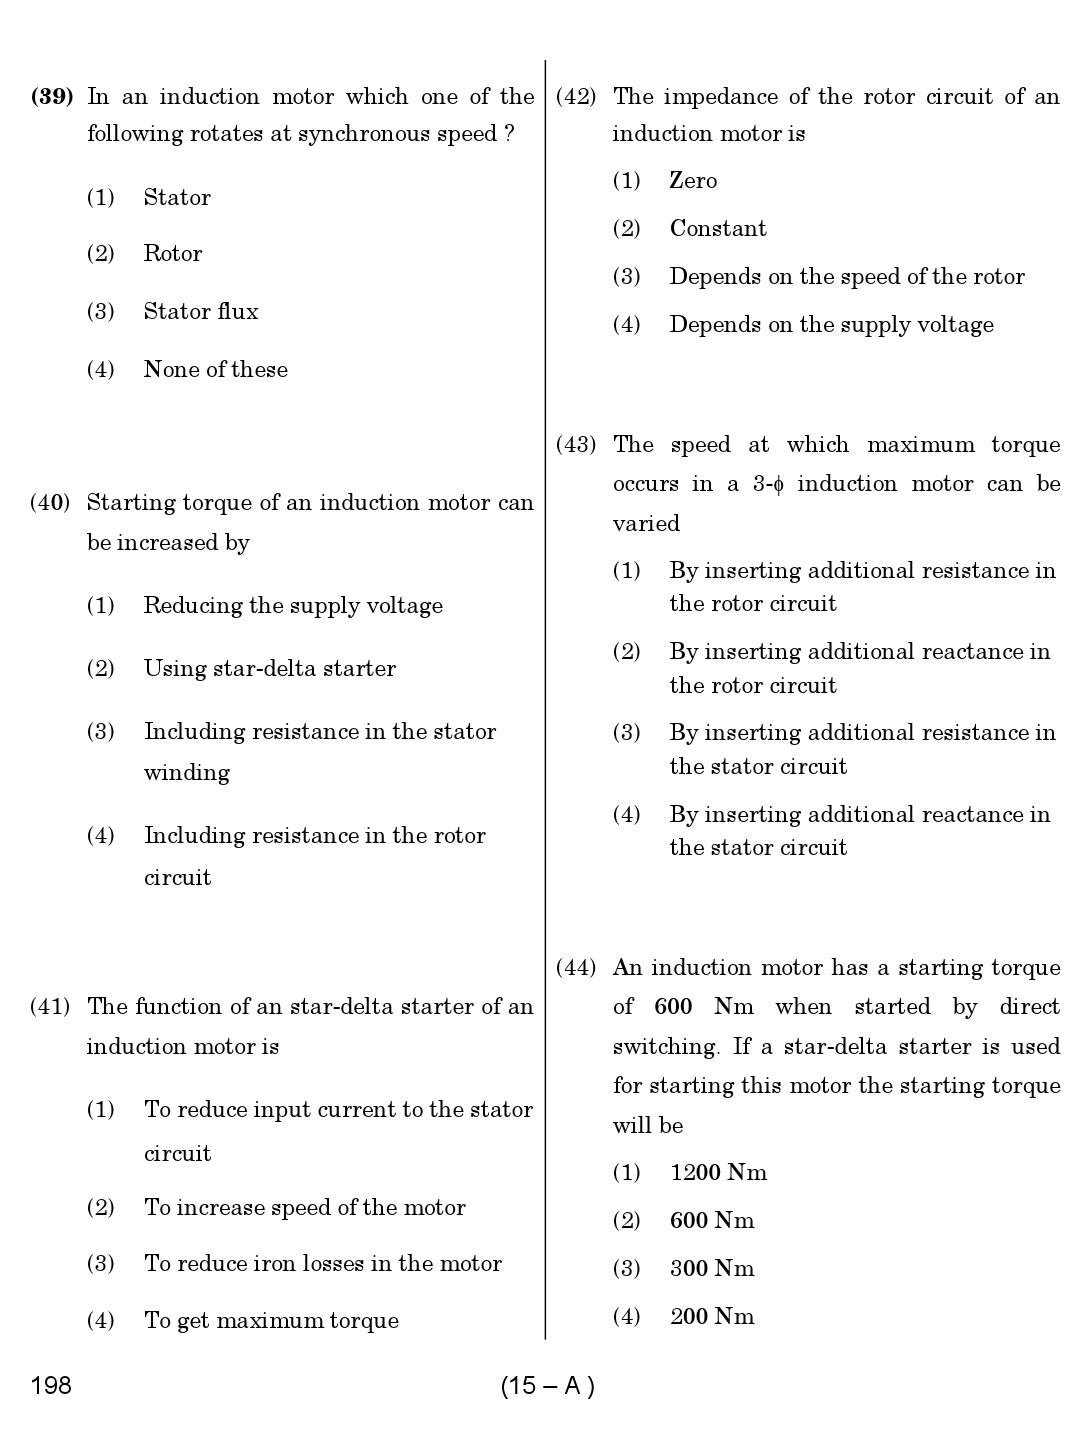 Karnataka PSC Junior Engineer Electrical Exam Sample Question Paper 15